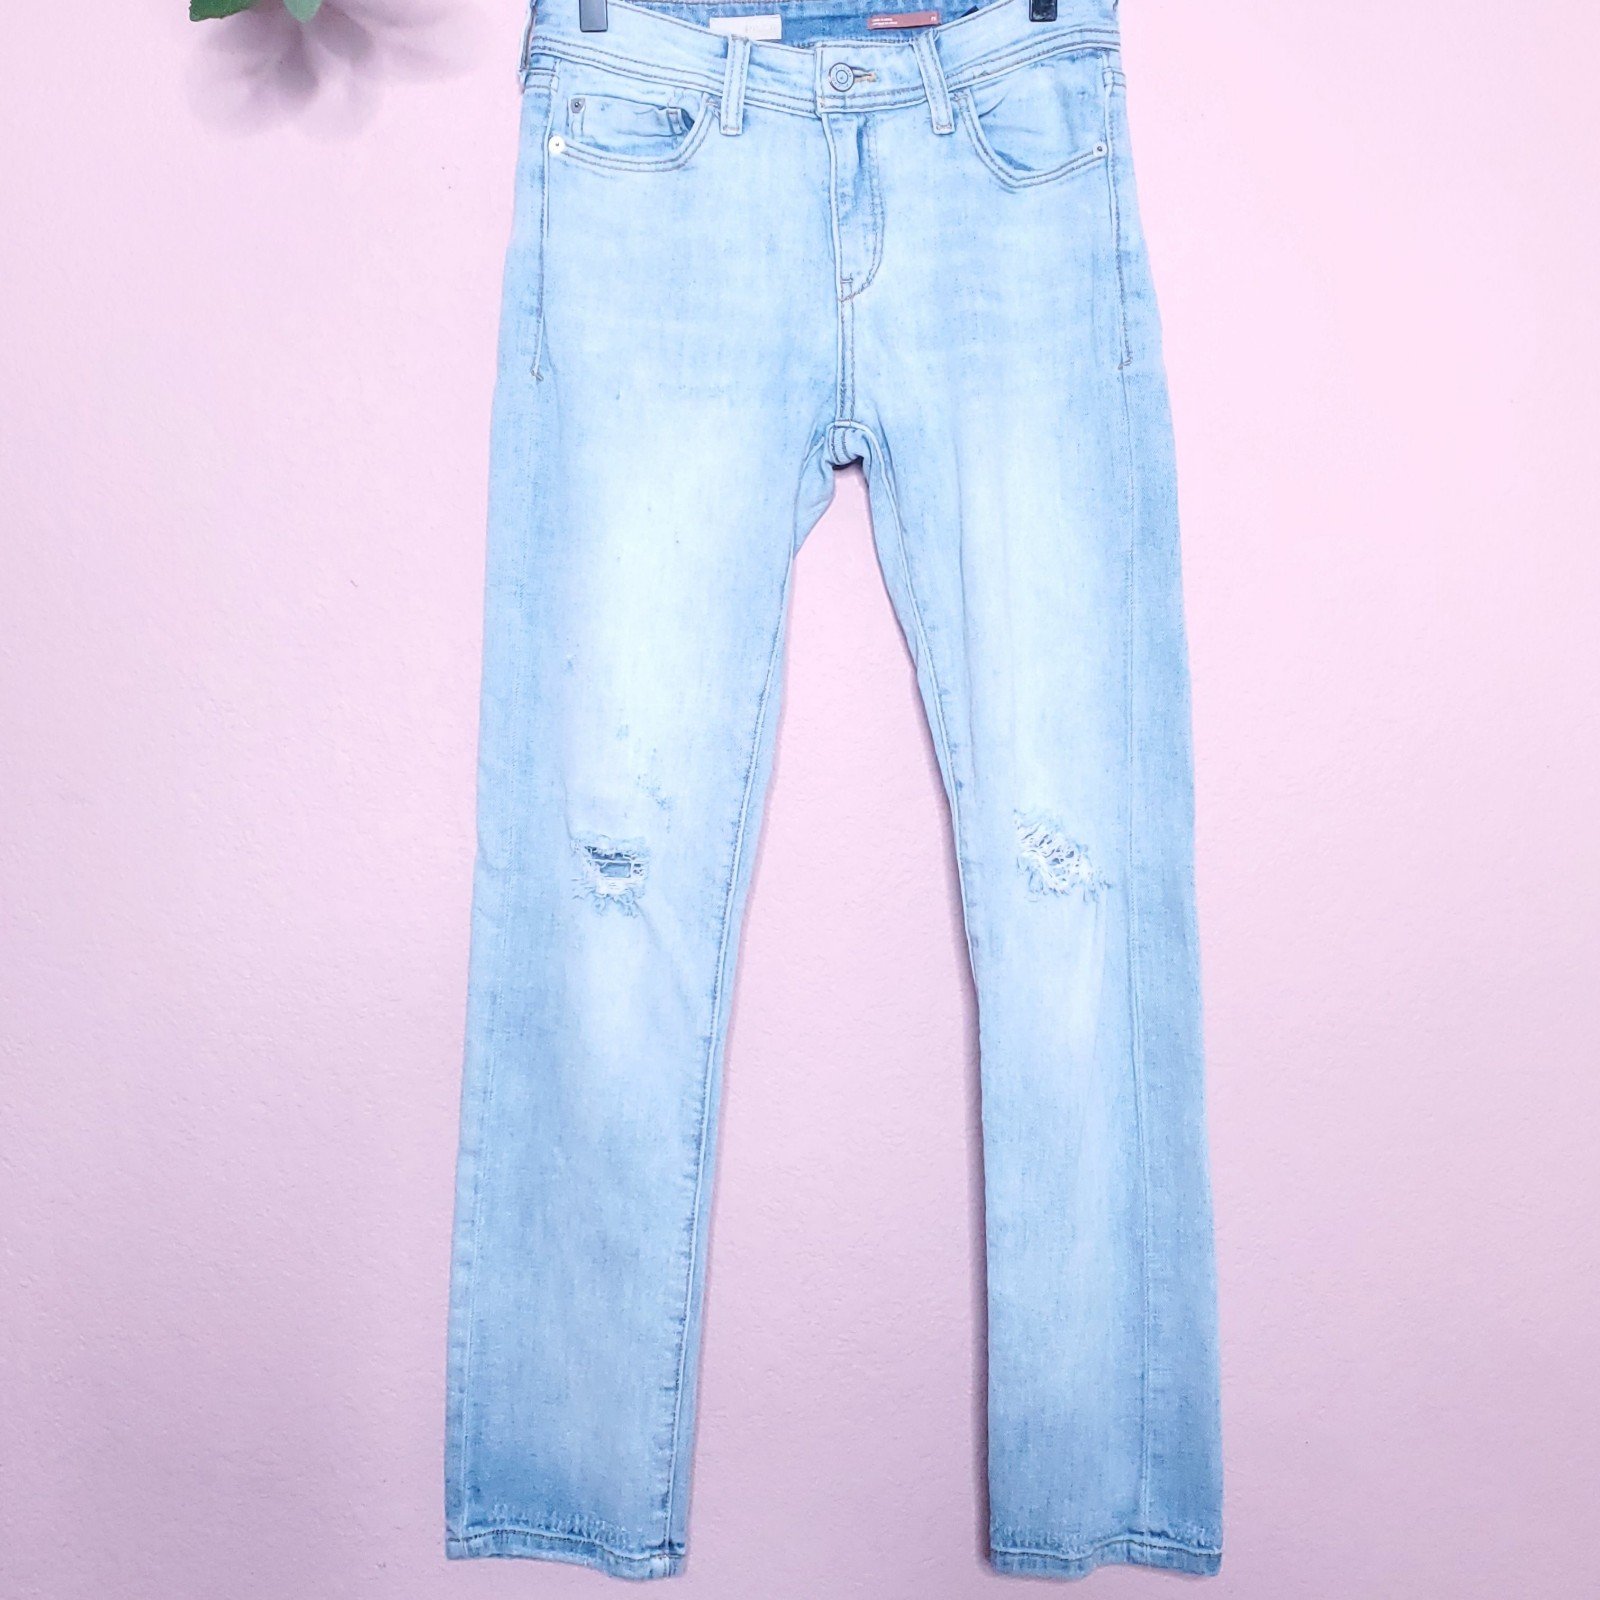 Personality Anthropologie Pilcro Slim Boyfriend Crop Distressed Jeans Fq82jZKoV Fashion